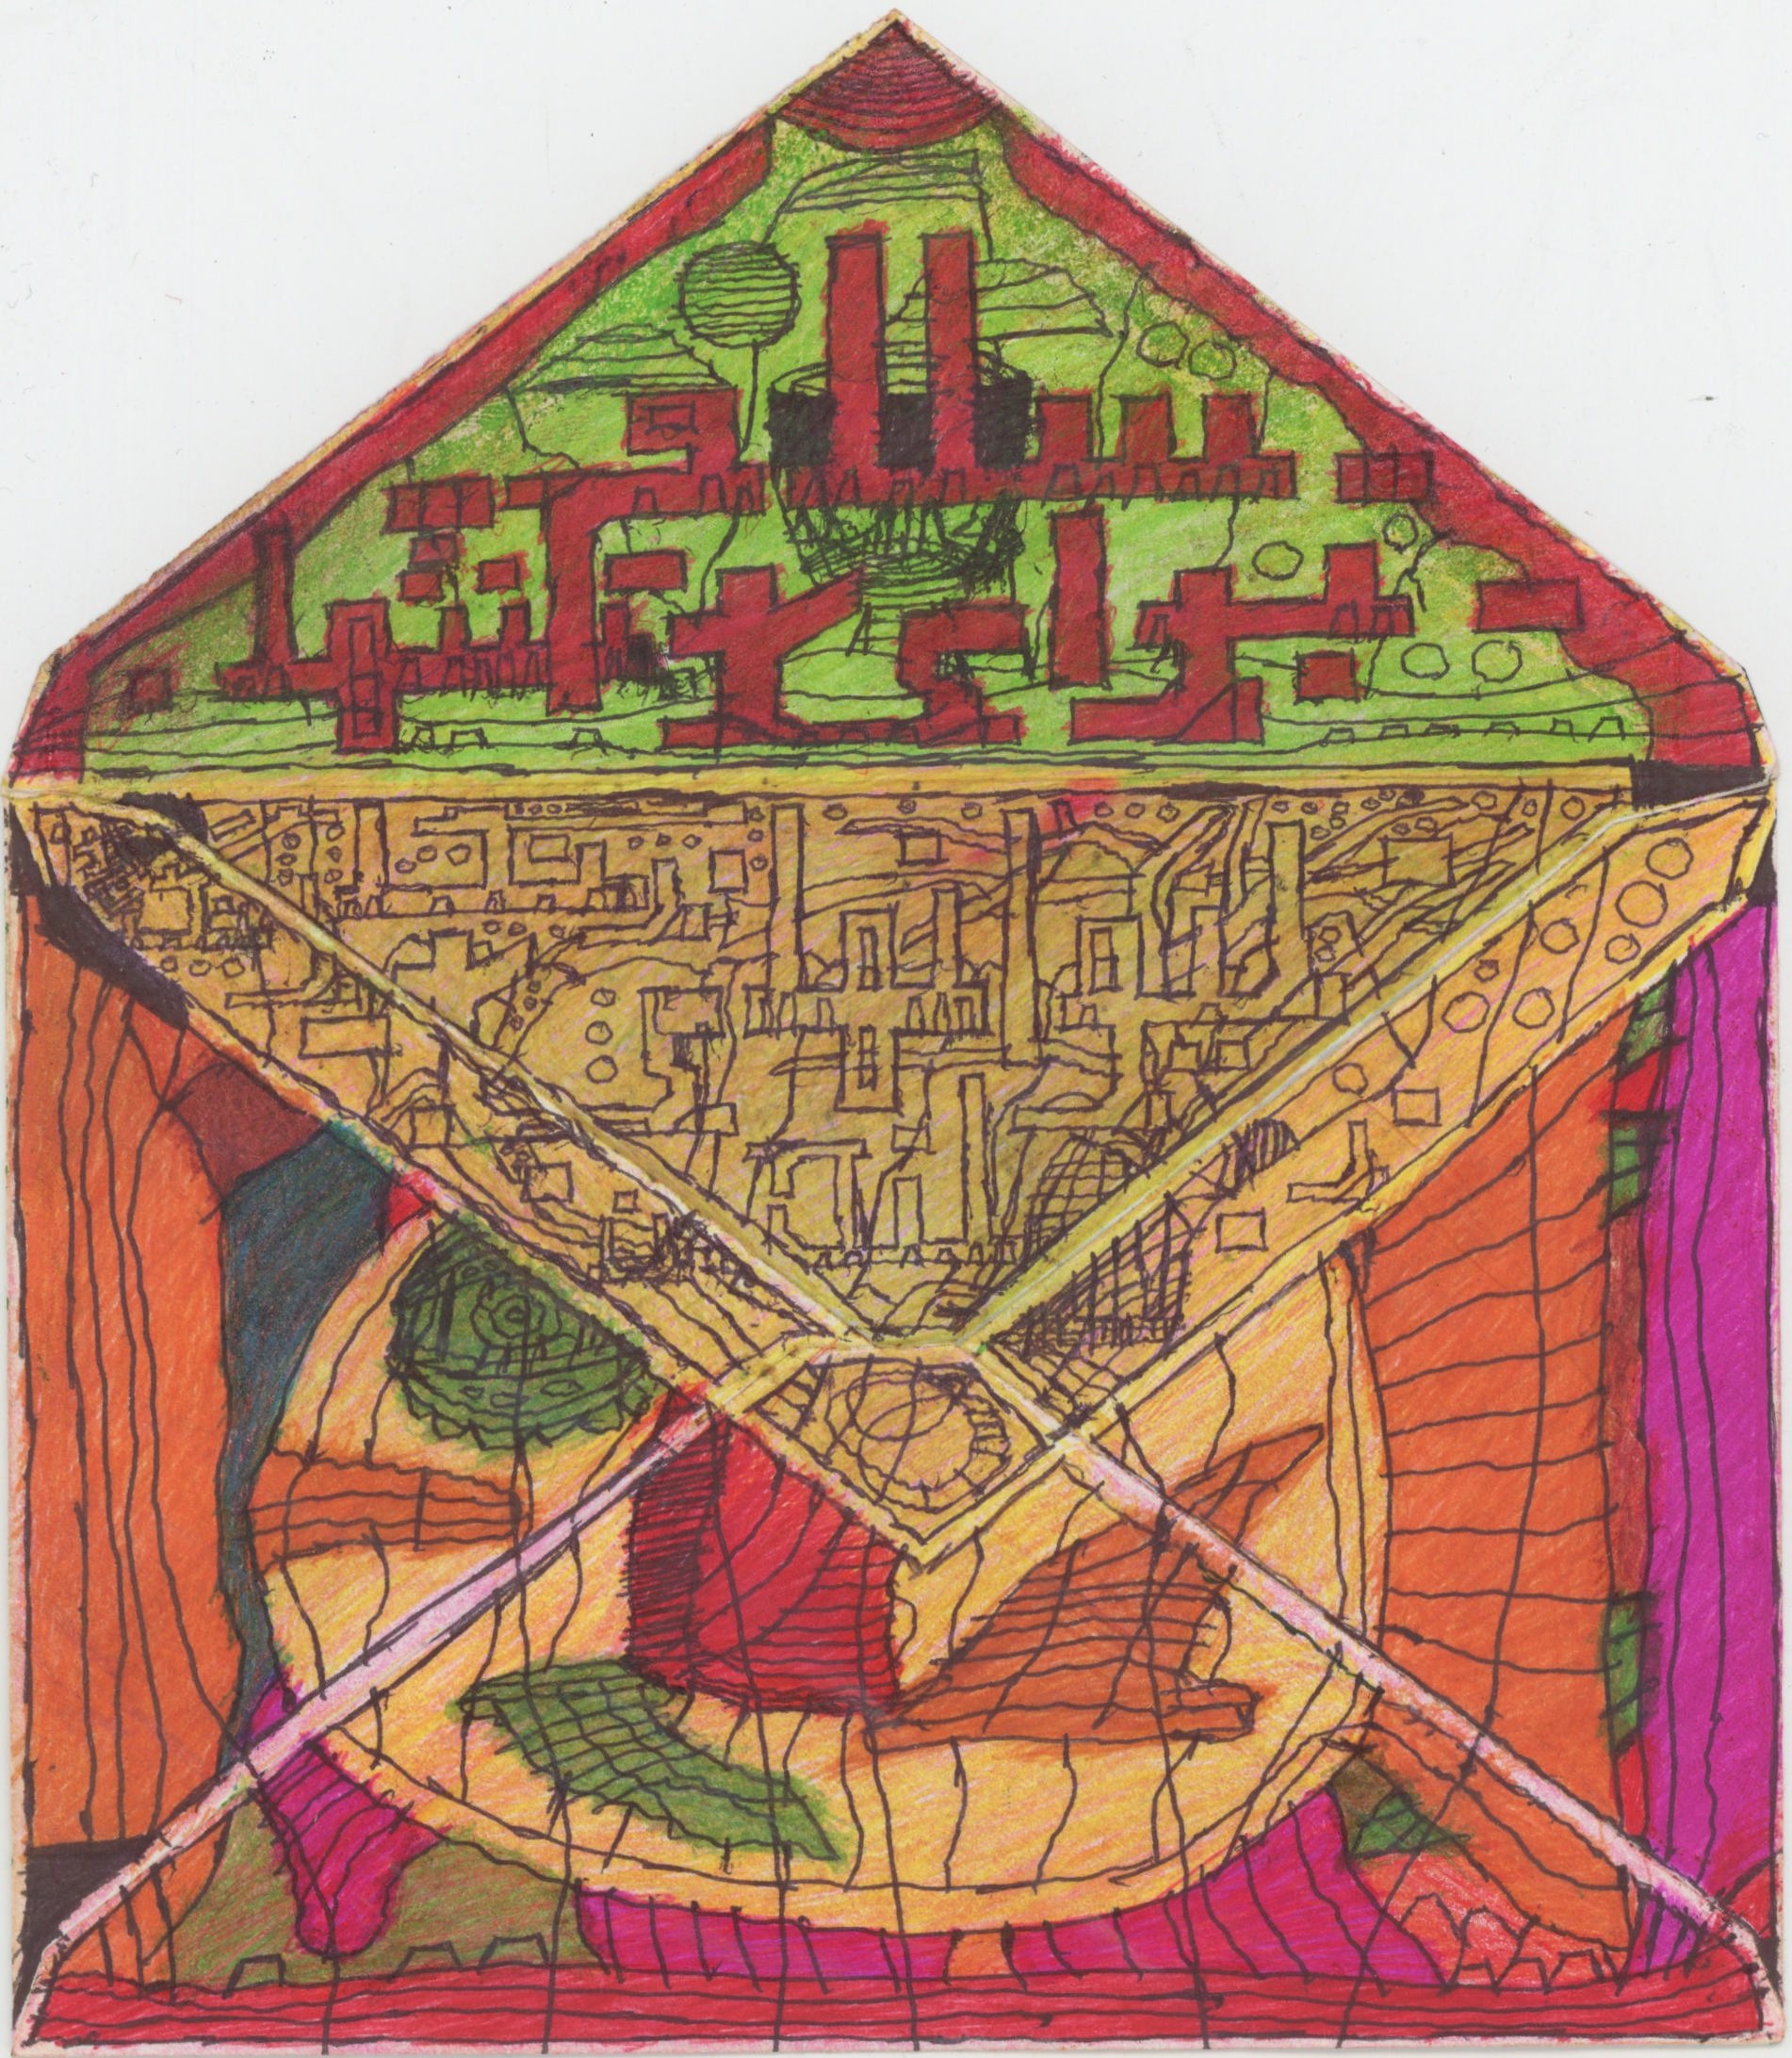   Kiyavash Danesh  Untitled  , n.d. Ink, marker on envelope 4.5 x 6.25 inches 11.4 x 15.9 cm KD 1 